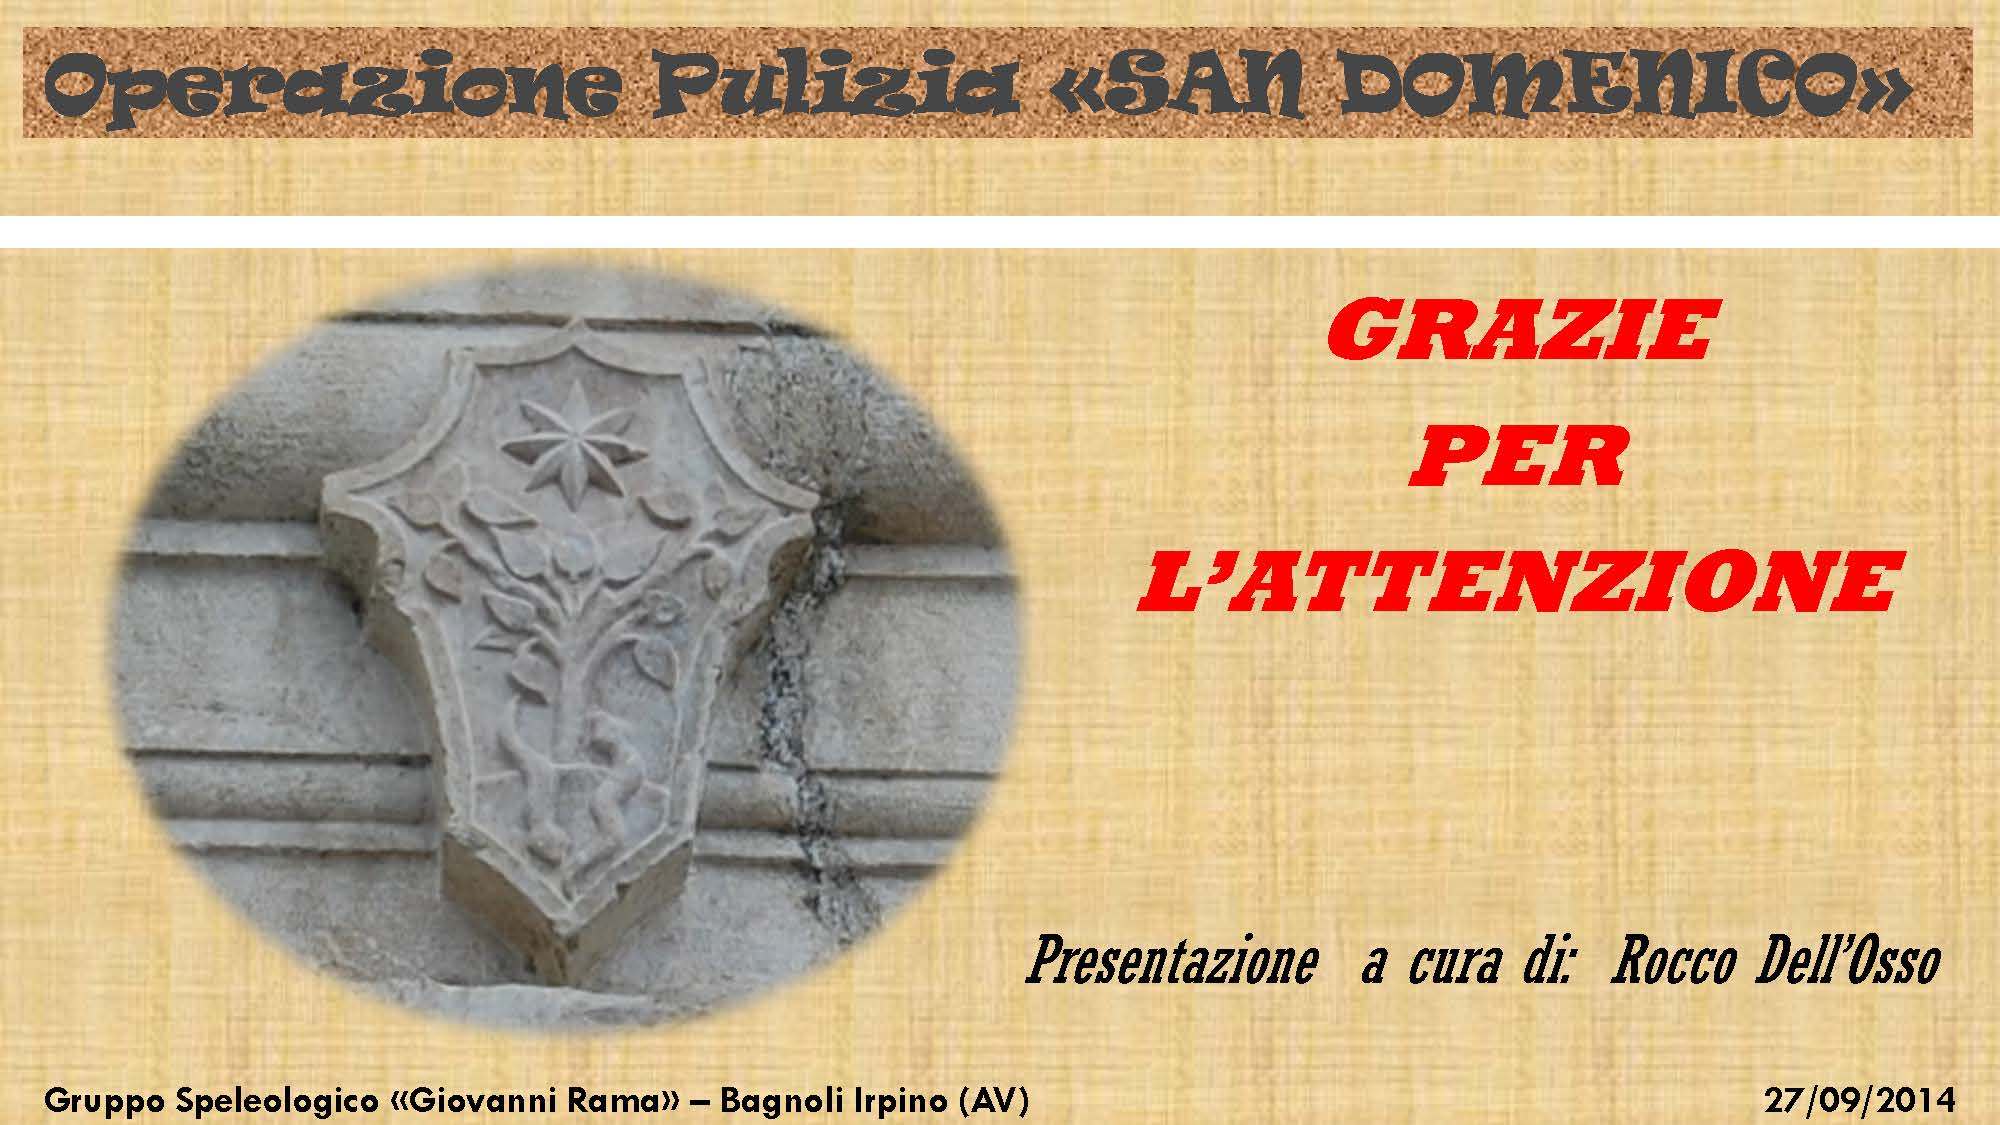 Bagnoli-Pulizia-San-Domenico-2014_Pagina_32